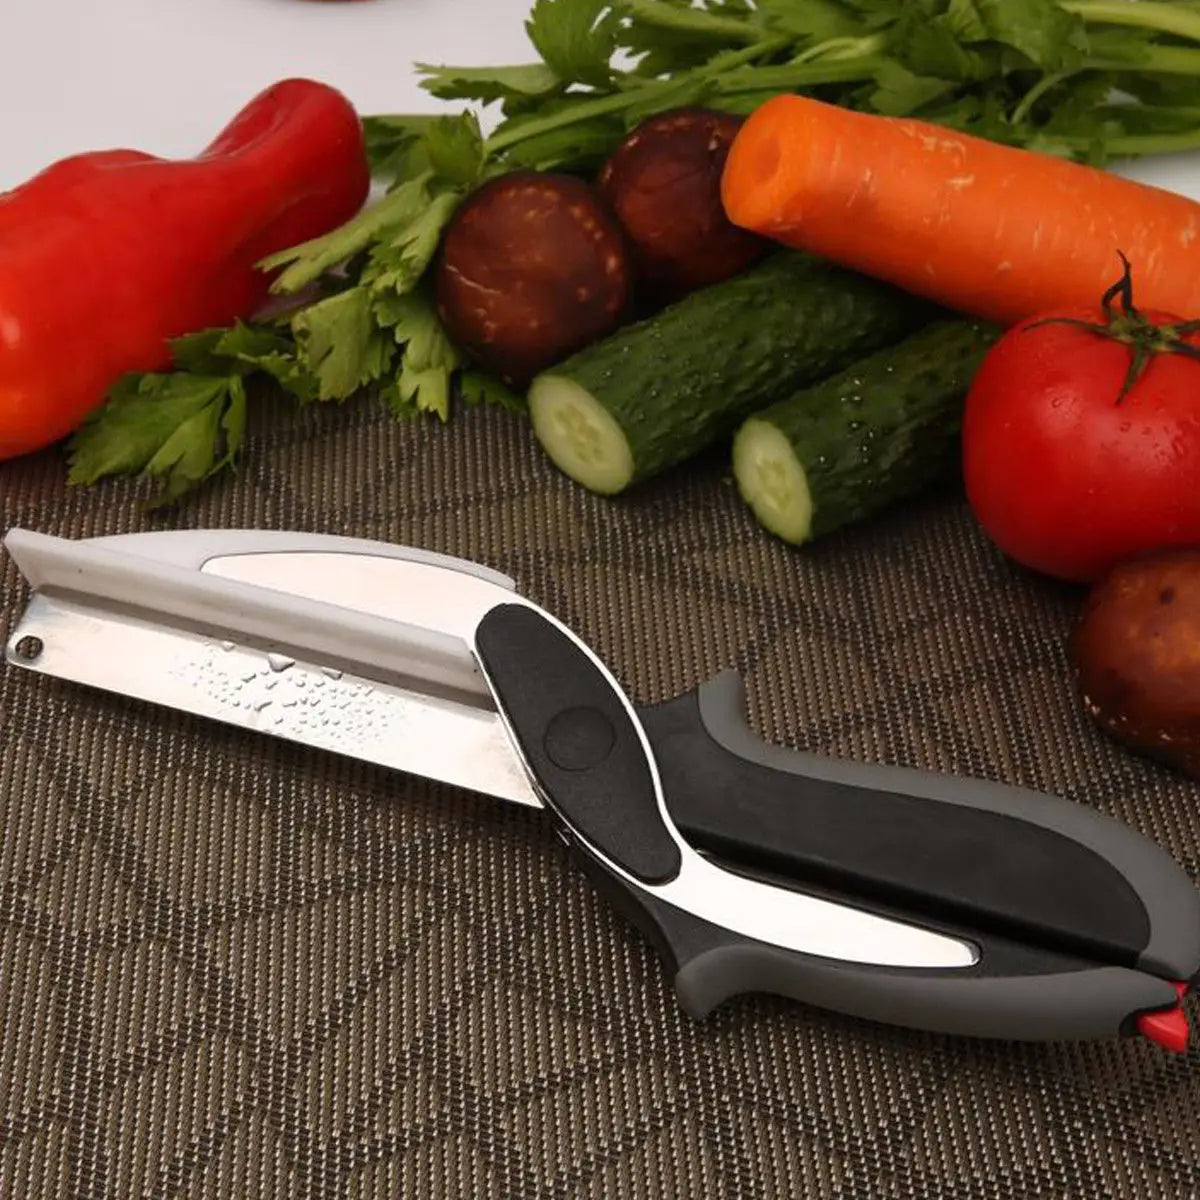 Flexicut Scissor Knife